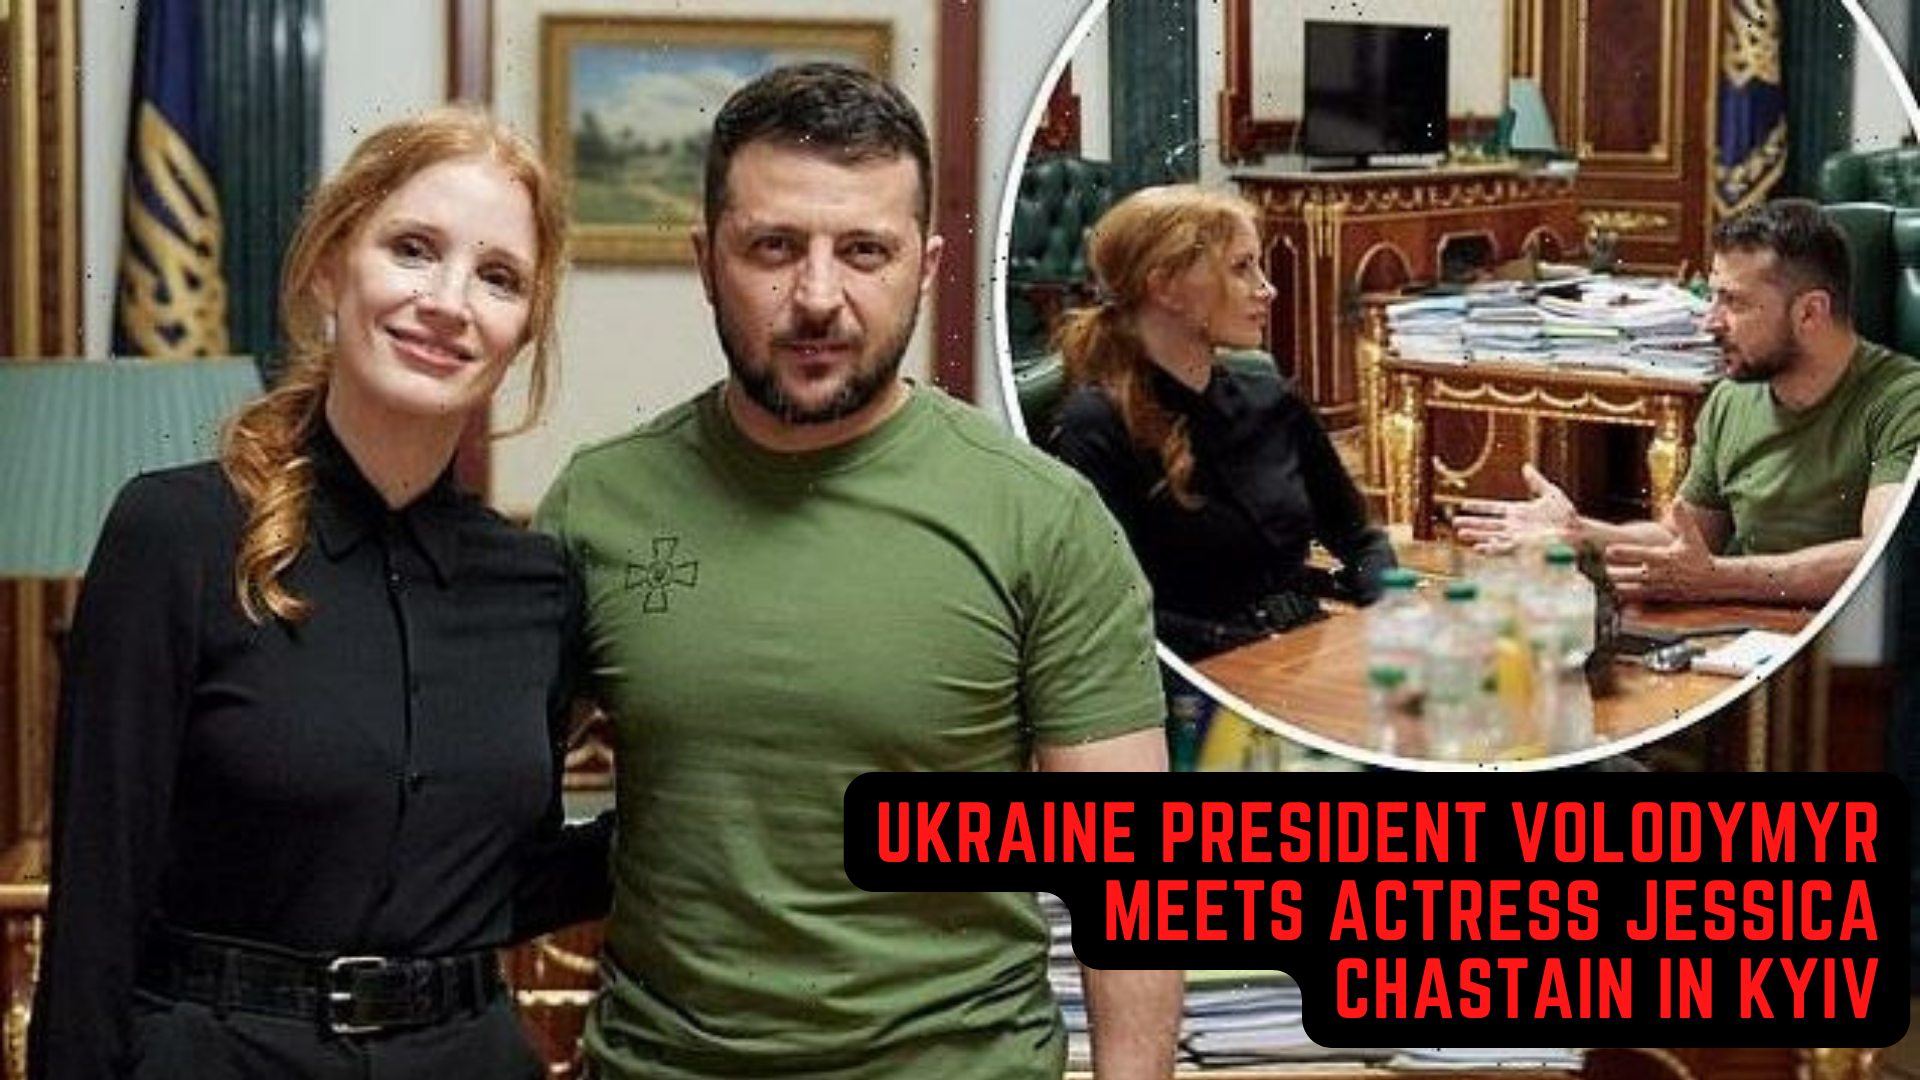 Ukraine President Volodymyr Meets Actress Jessica Chastain In Kyiv